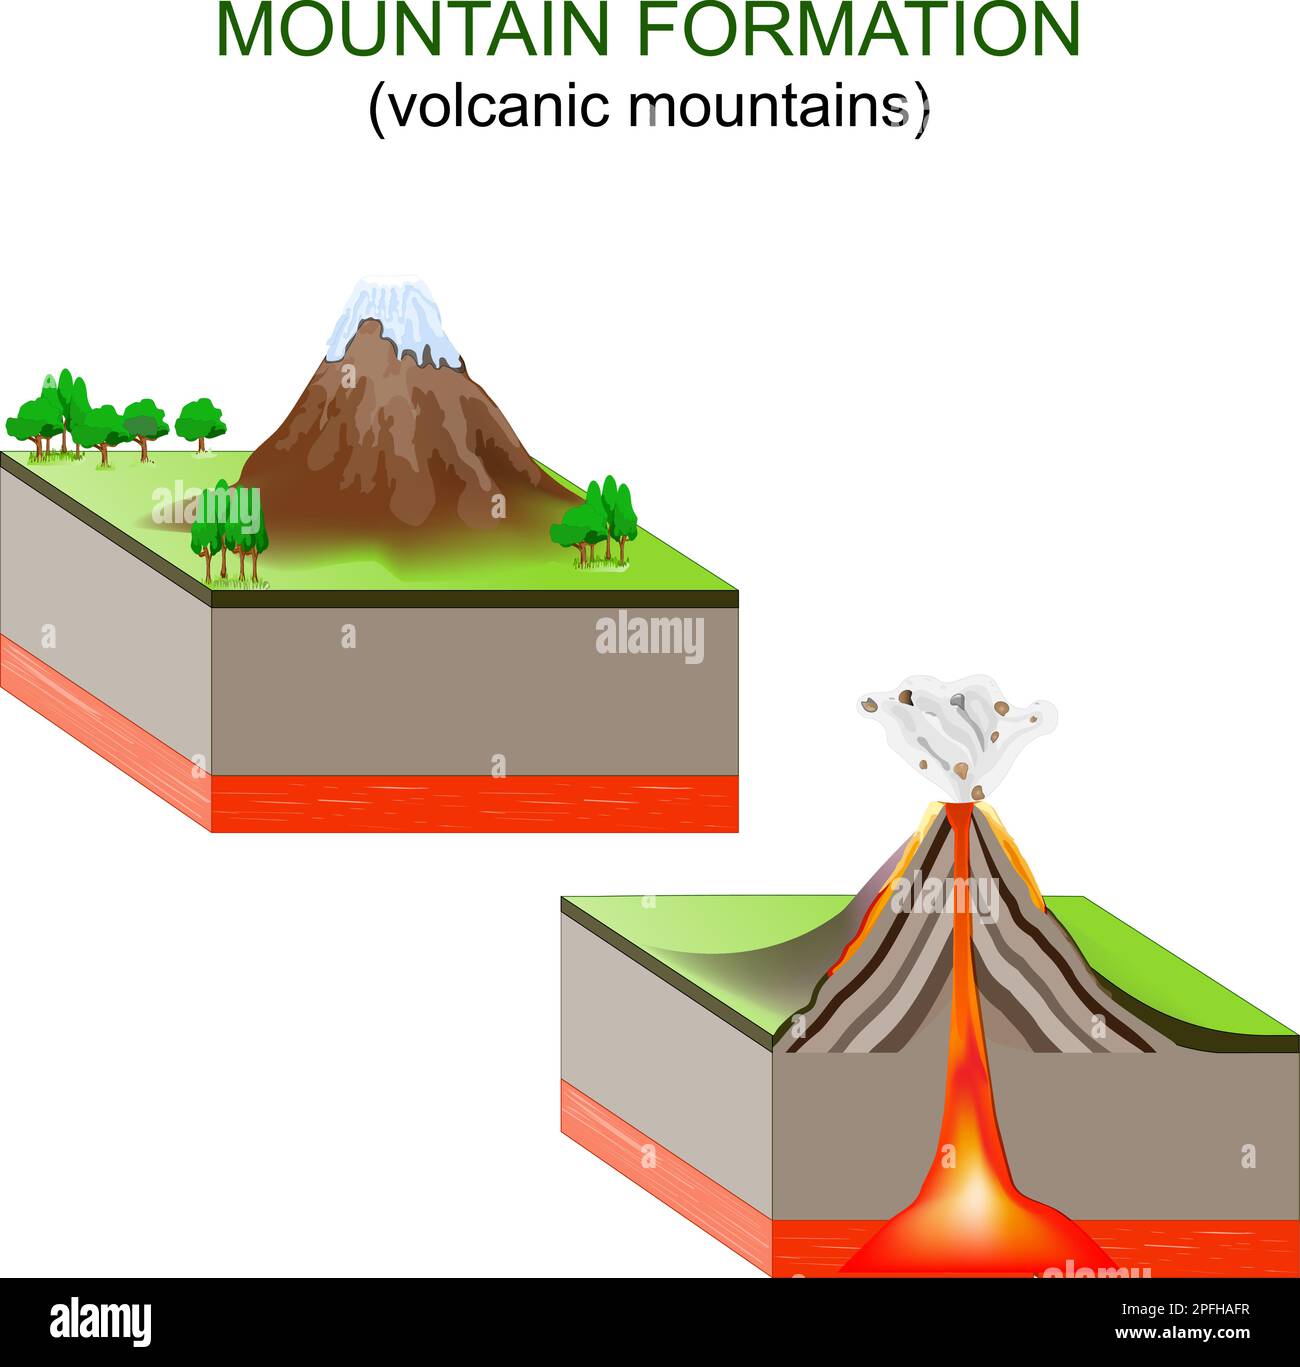 Gebirgsformation. Vulkanische Berge. Bewegungen tektonischer Platten erzeugen Vulkane entlang der Plattengrenzen, die ausbrechen und Berge bilden. Vect Stock Vektor